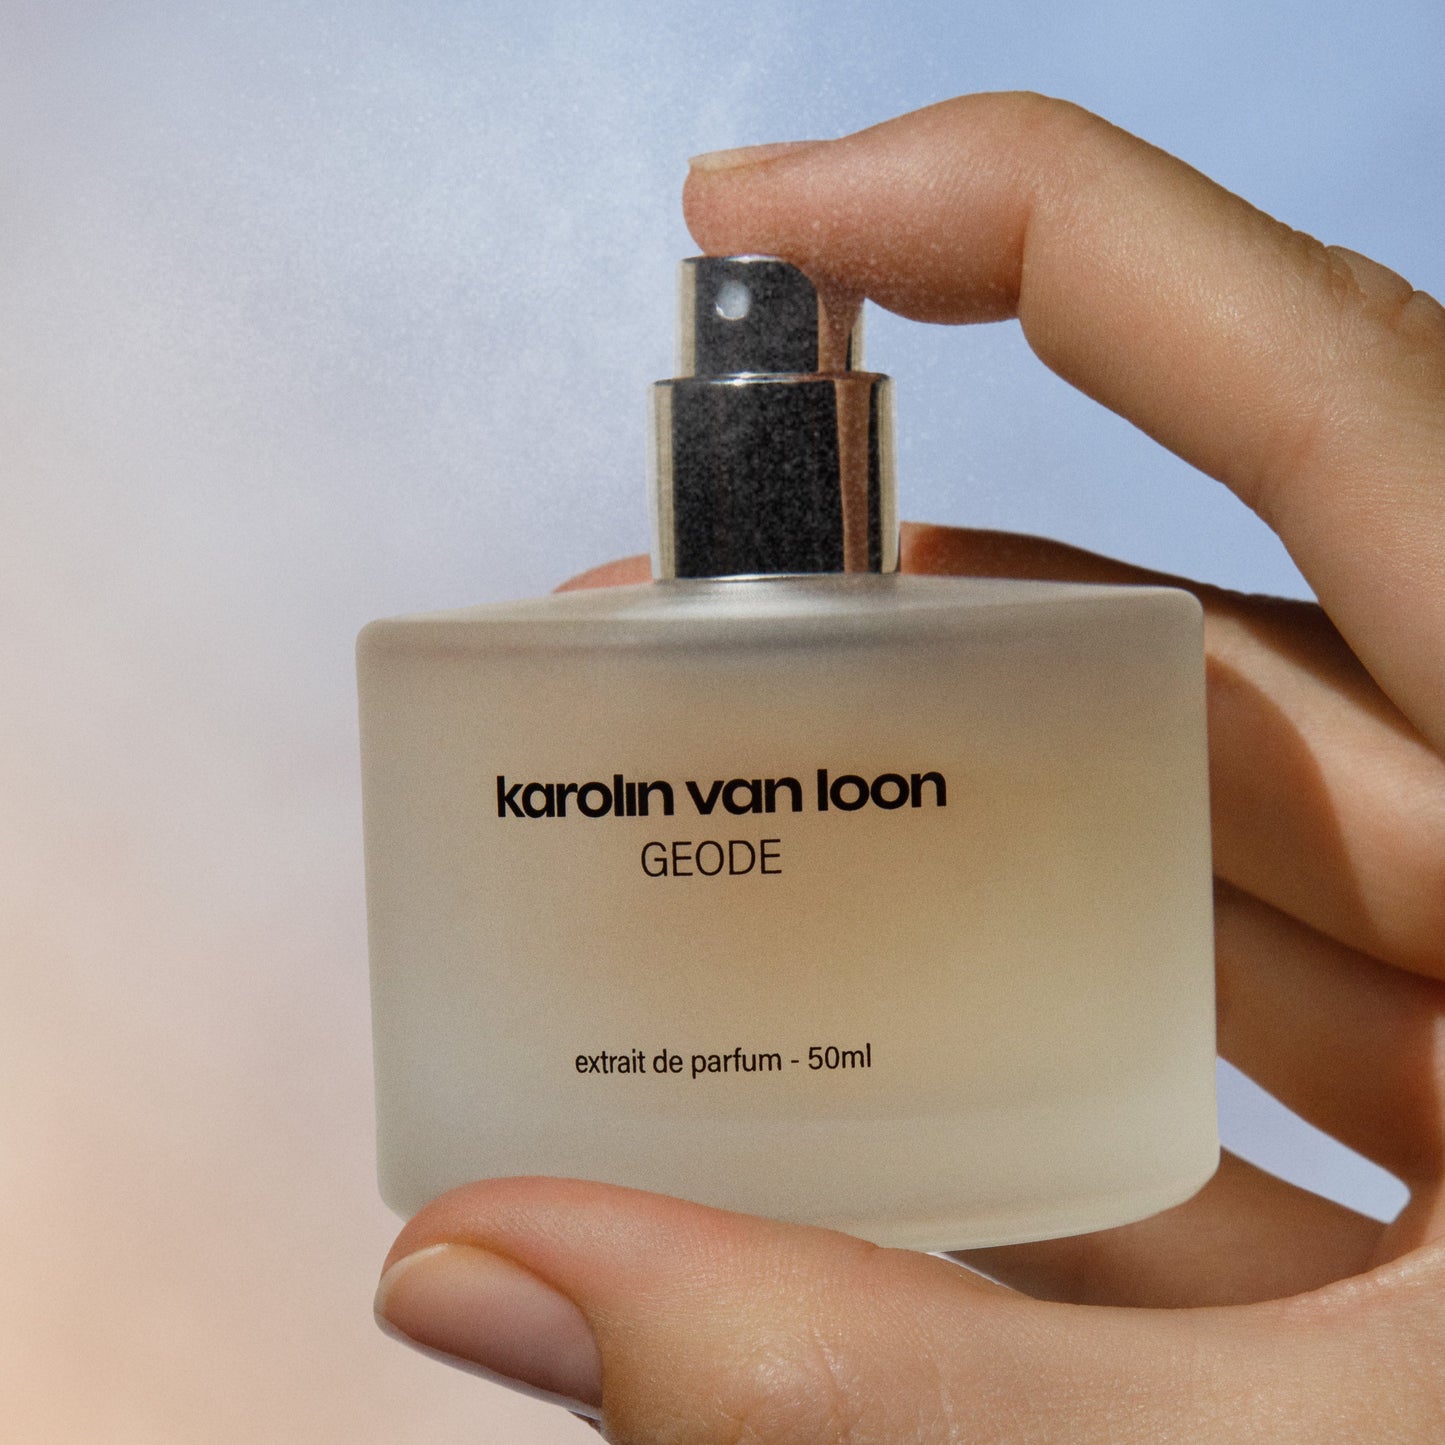 Karolin van Loon Geode, Eau de Parfum 50ml